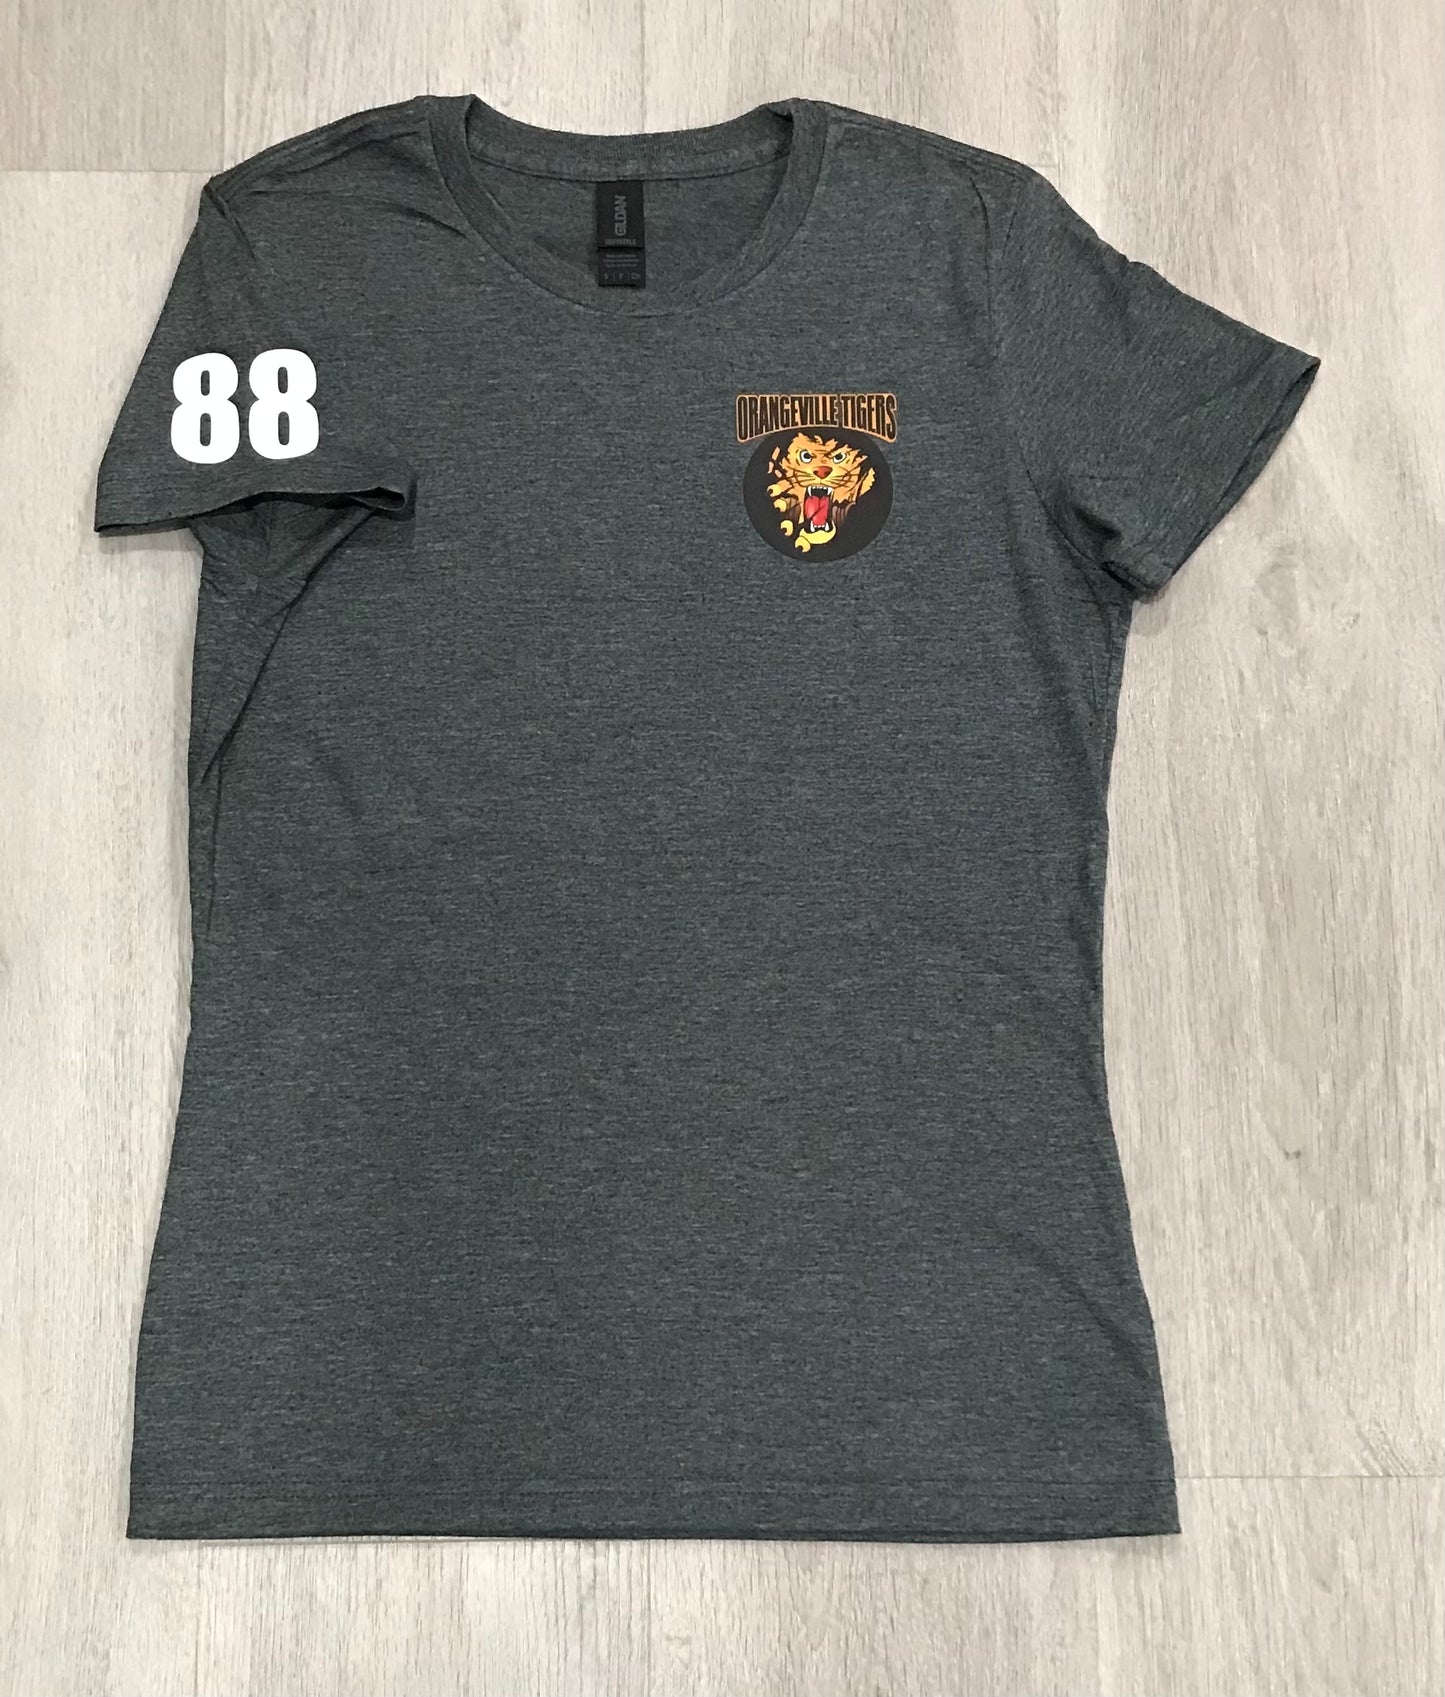 Orangeville tigers hockey - Grey T-shirts